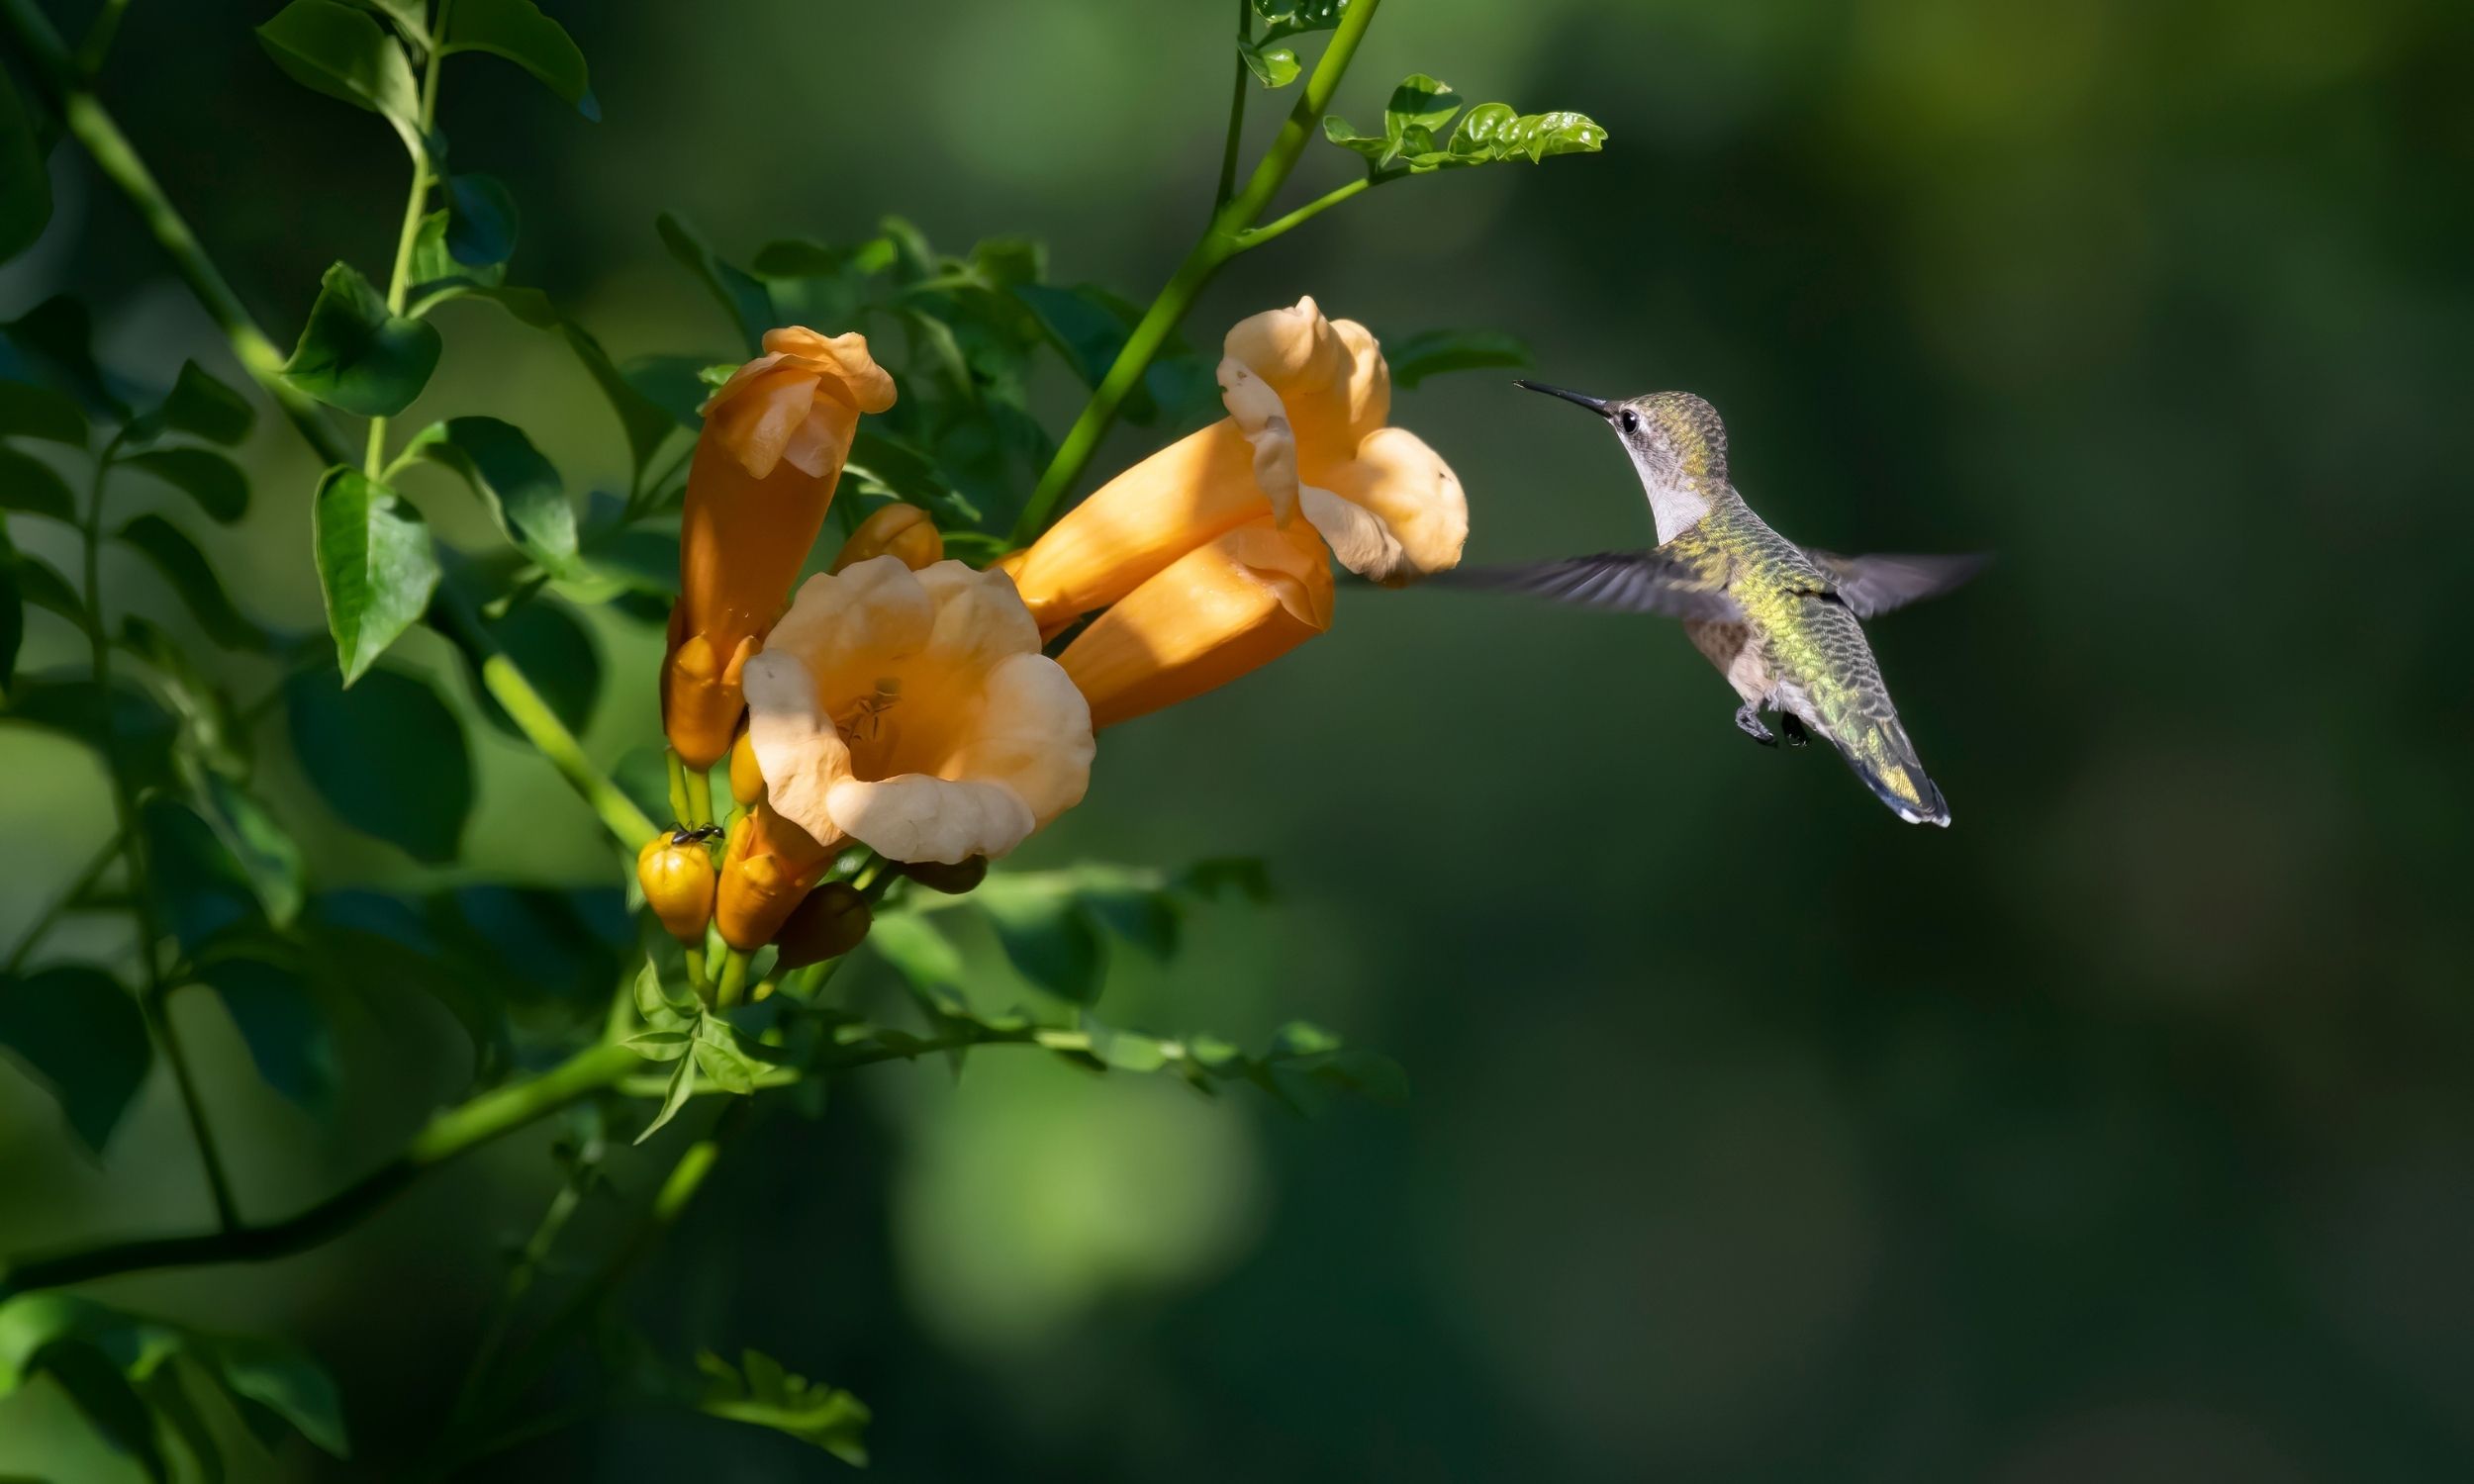 female hummingbird drinking nectar from a flower